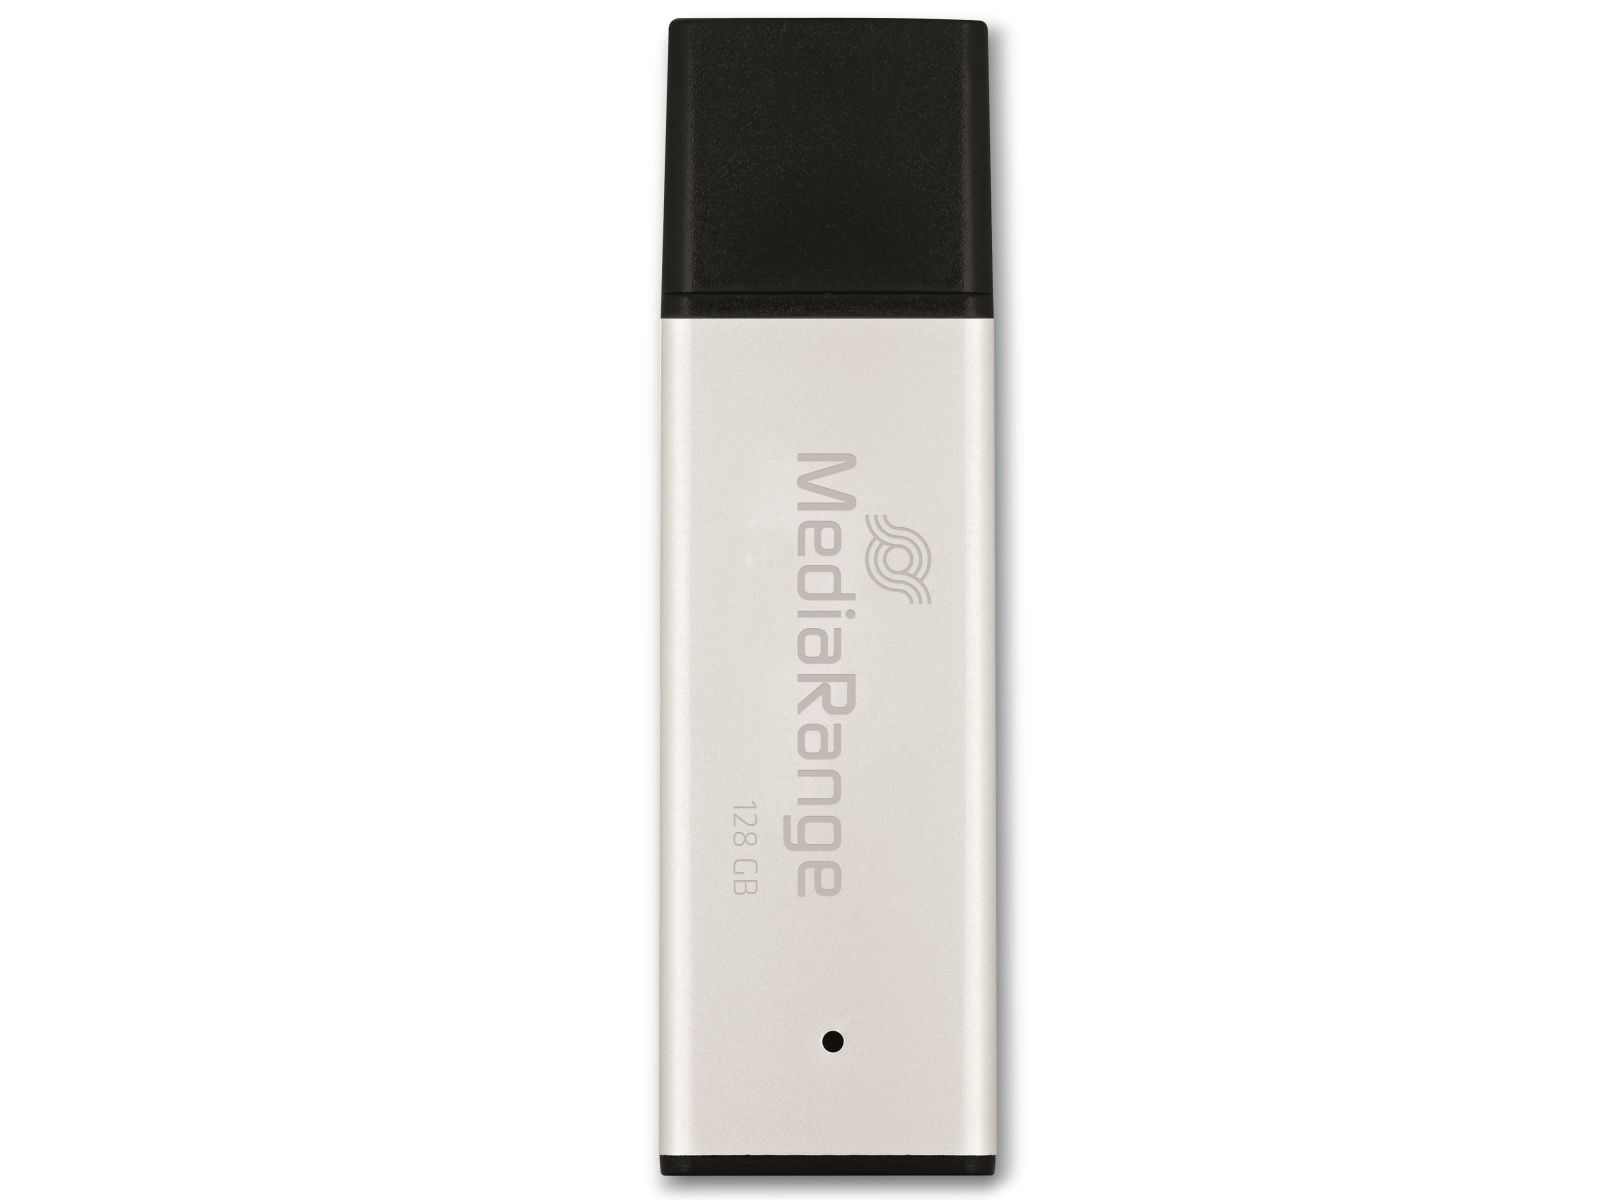 3.0, GB) 128 USB-Stick (schwarz/silber, USB-Stick GB 128 USB MR1902, MEDIARANGE